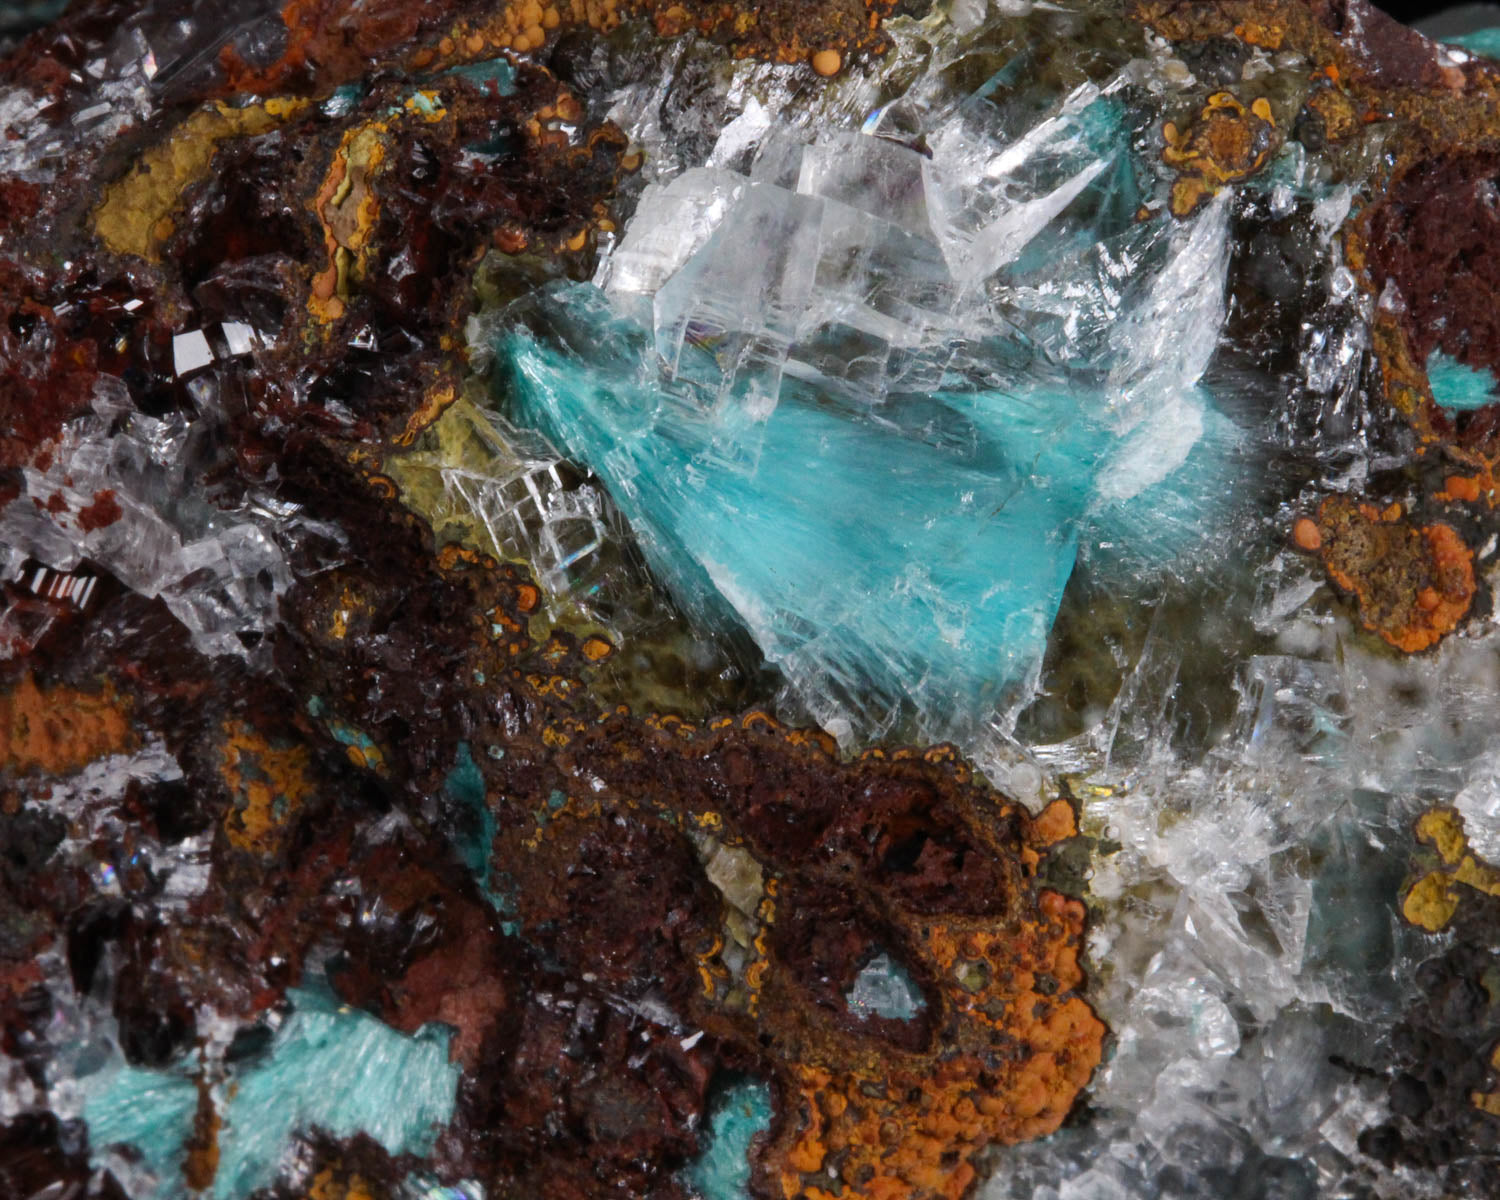 Aurichalcite with Calcite